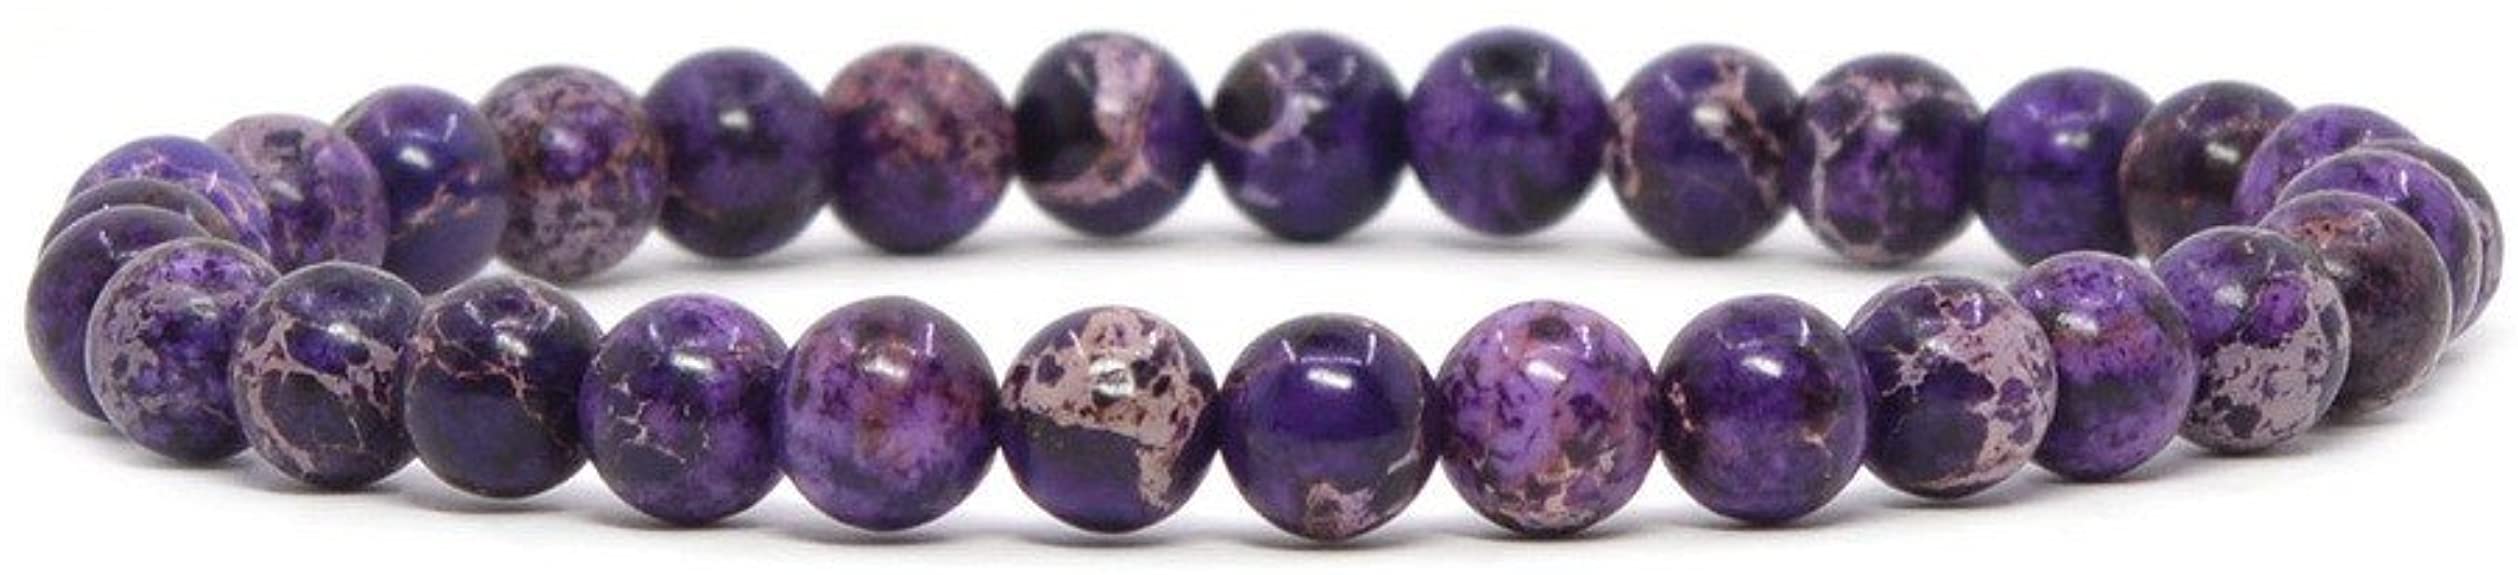 Justinstones Gem Semi Precious Gemstone 6mm Round Beads Stretch Bracelet 6.5 Inch Unisex